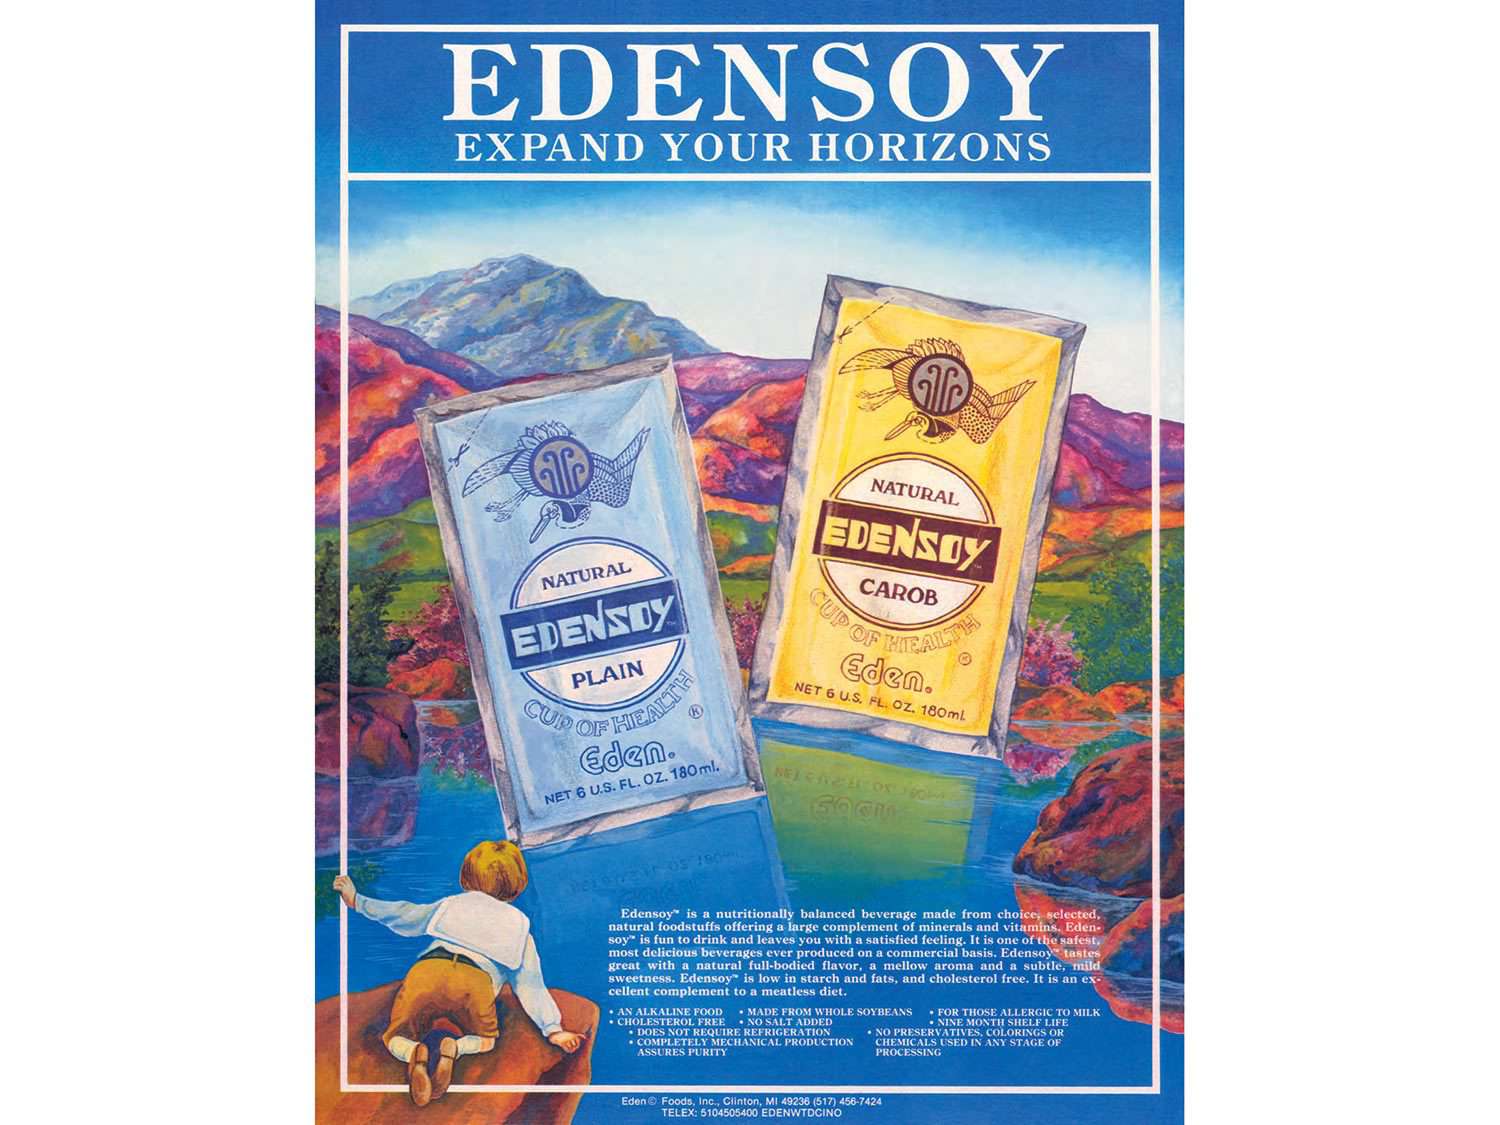 Edensoy的复古广告，以质朴的碳水化合物口味的豆浆为特色，背景是田园诗般的背景，广告宣称，